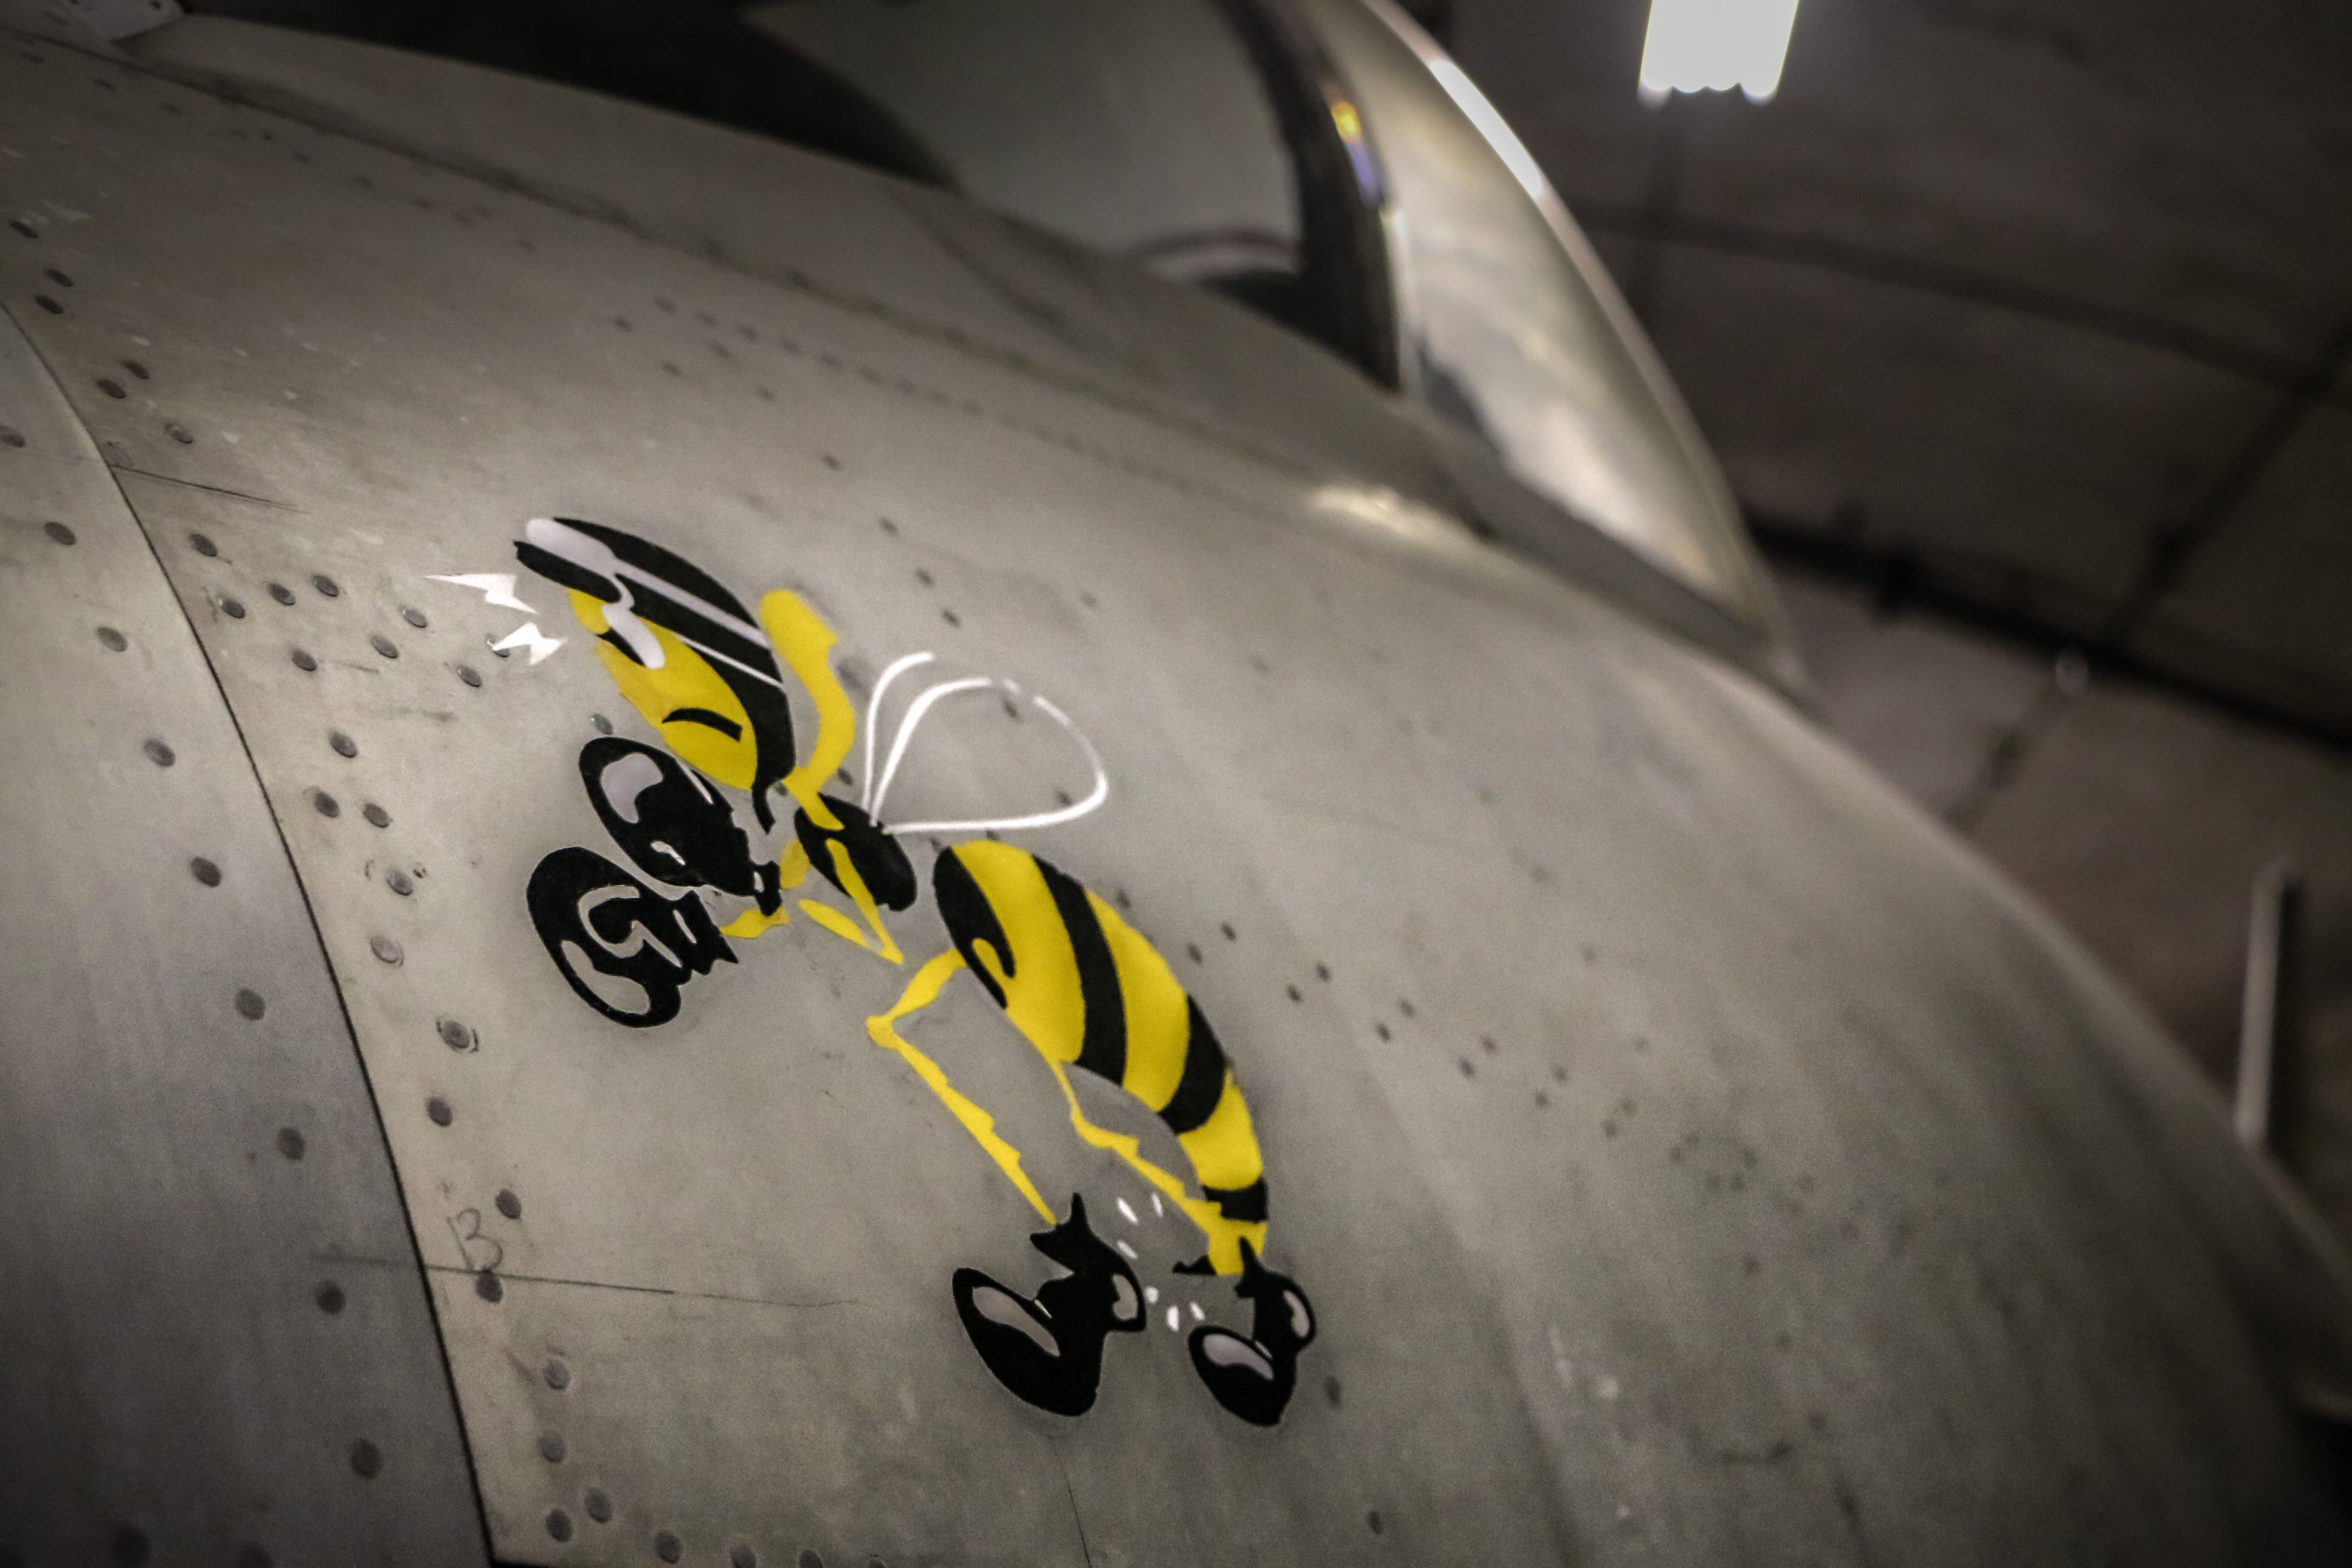 Swedish jet fighter art photo